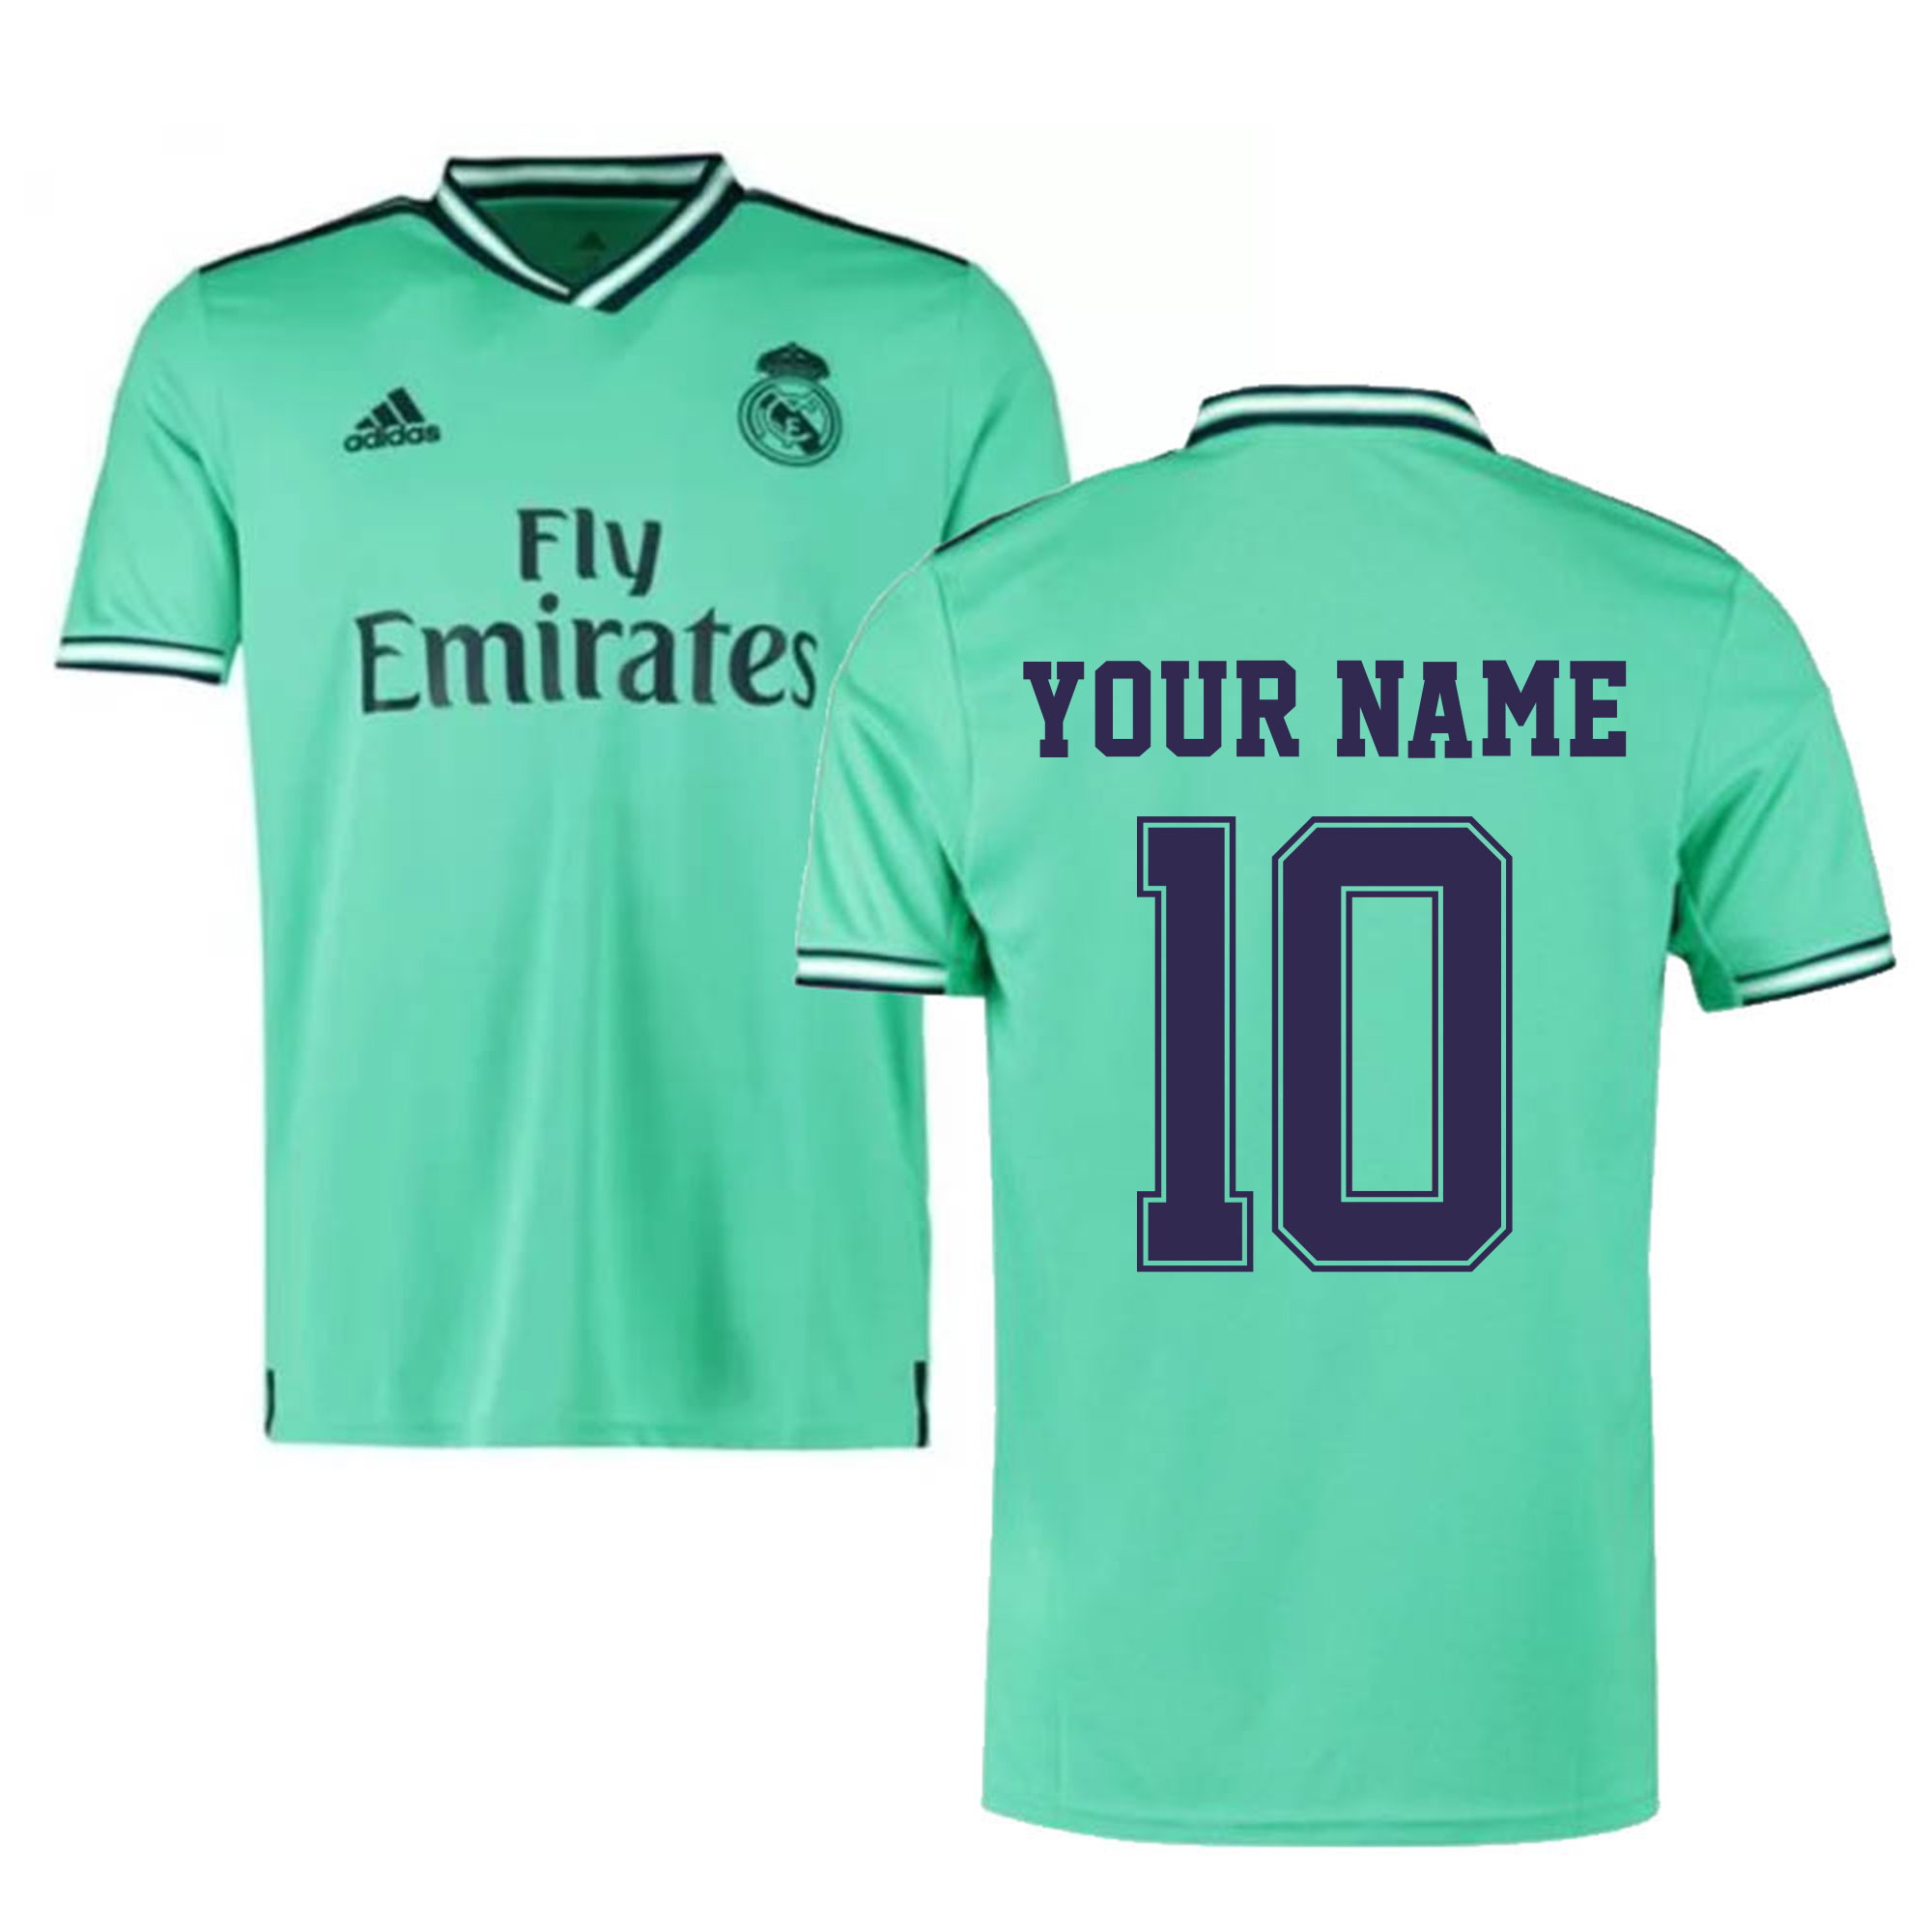 2019 2020 Real Madrid Adidas Third Football Shirt Your Name Eh5128 158204 118 50 Teamzo Com